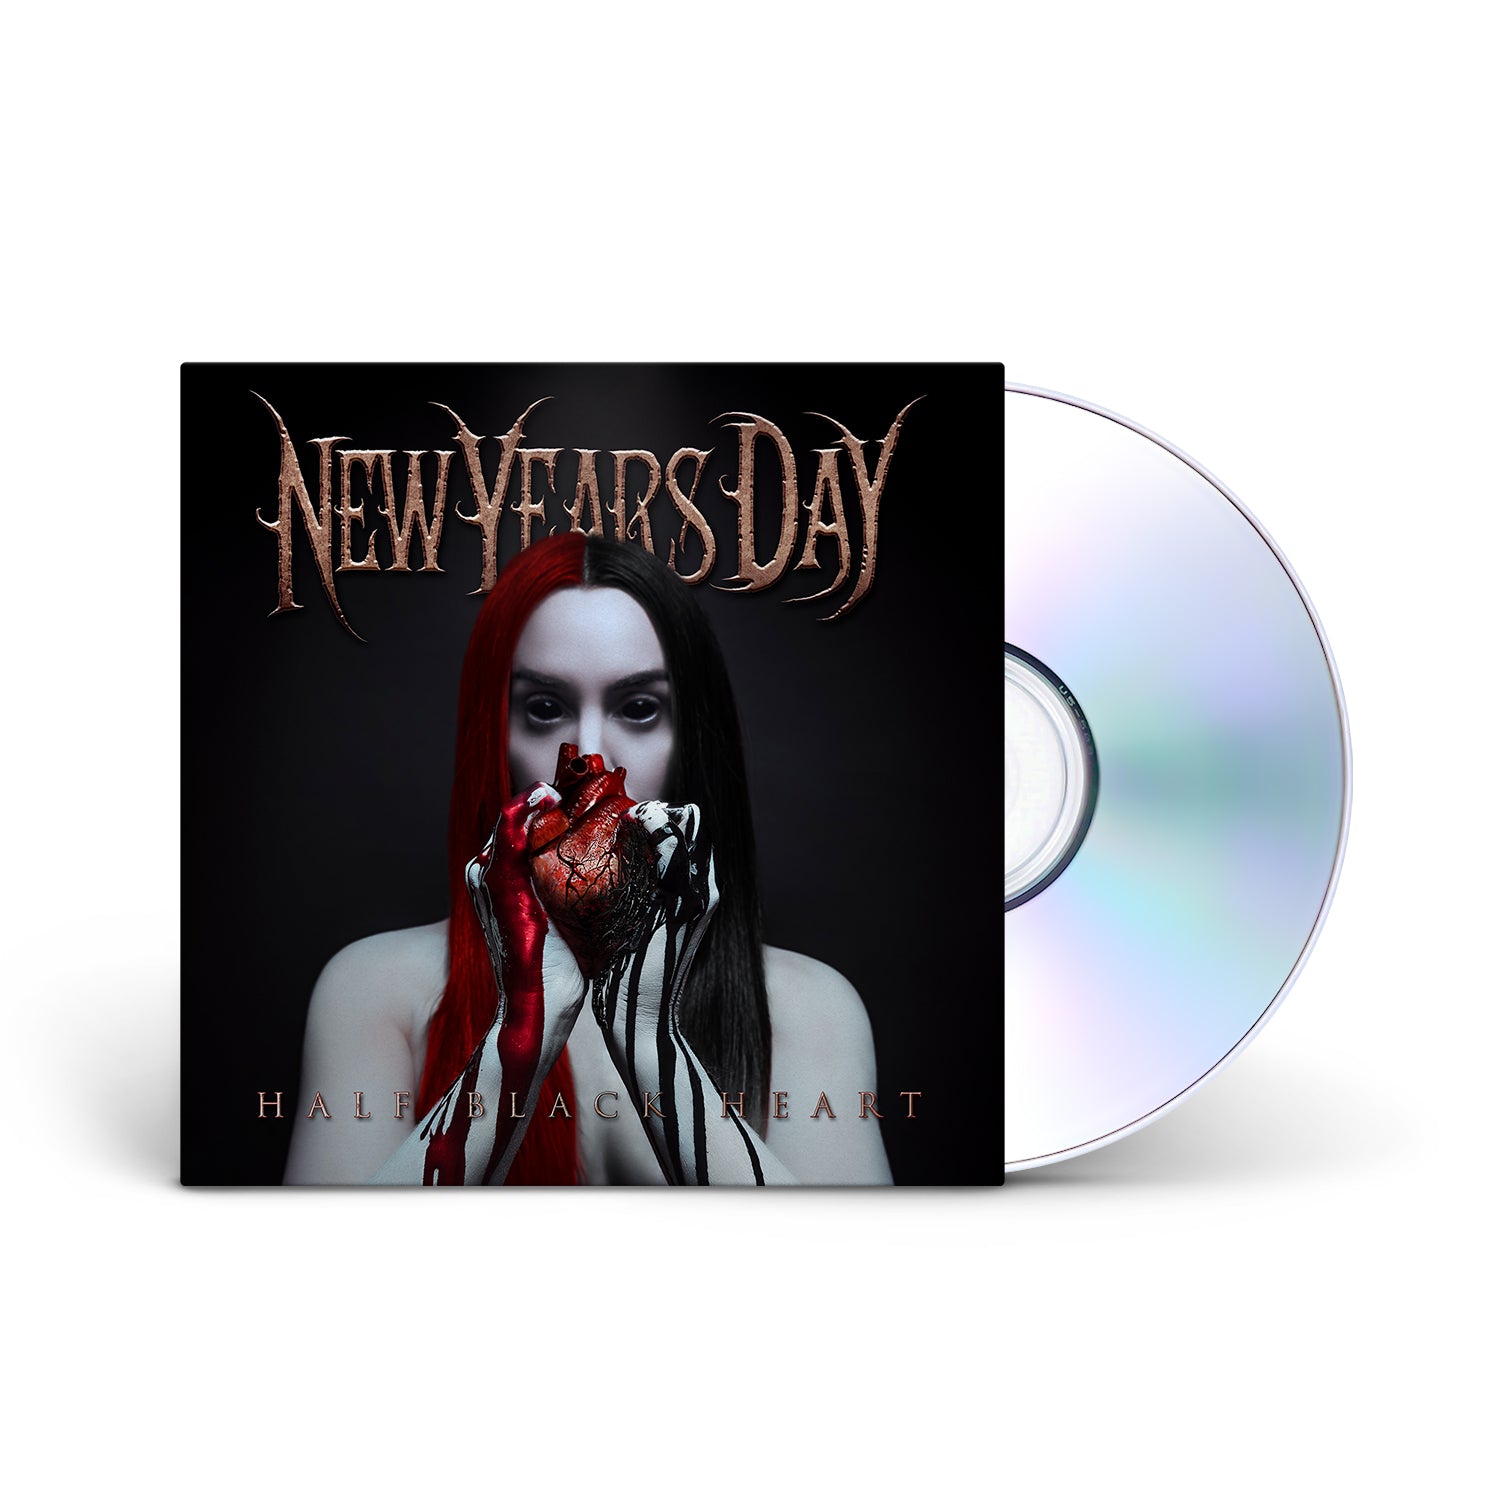 NEW YEARS DAY - Half Black Heart - Jewelcase CD